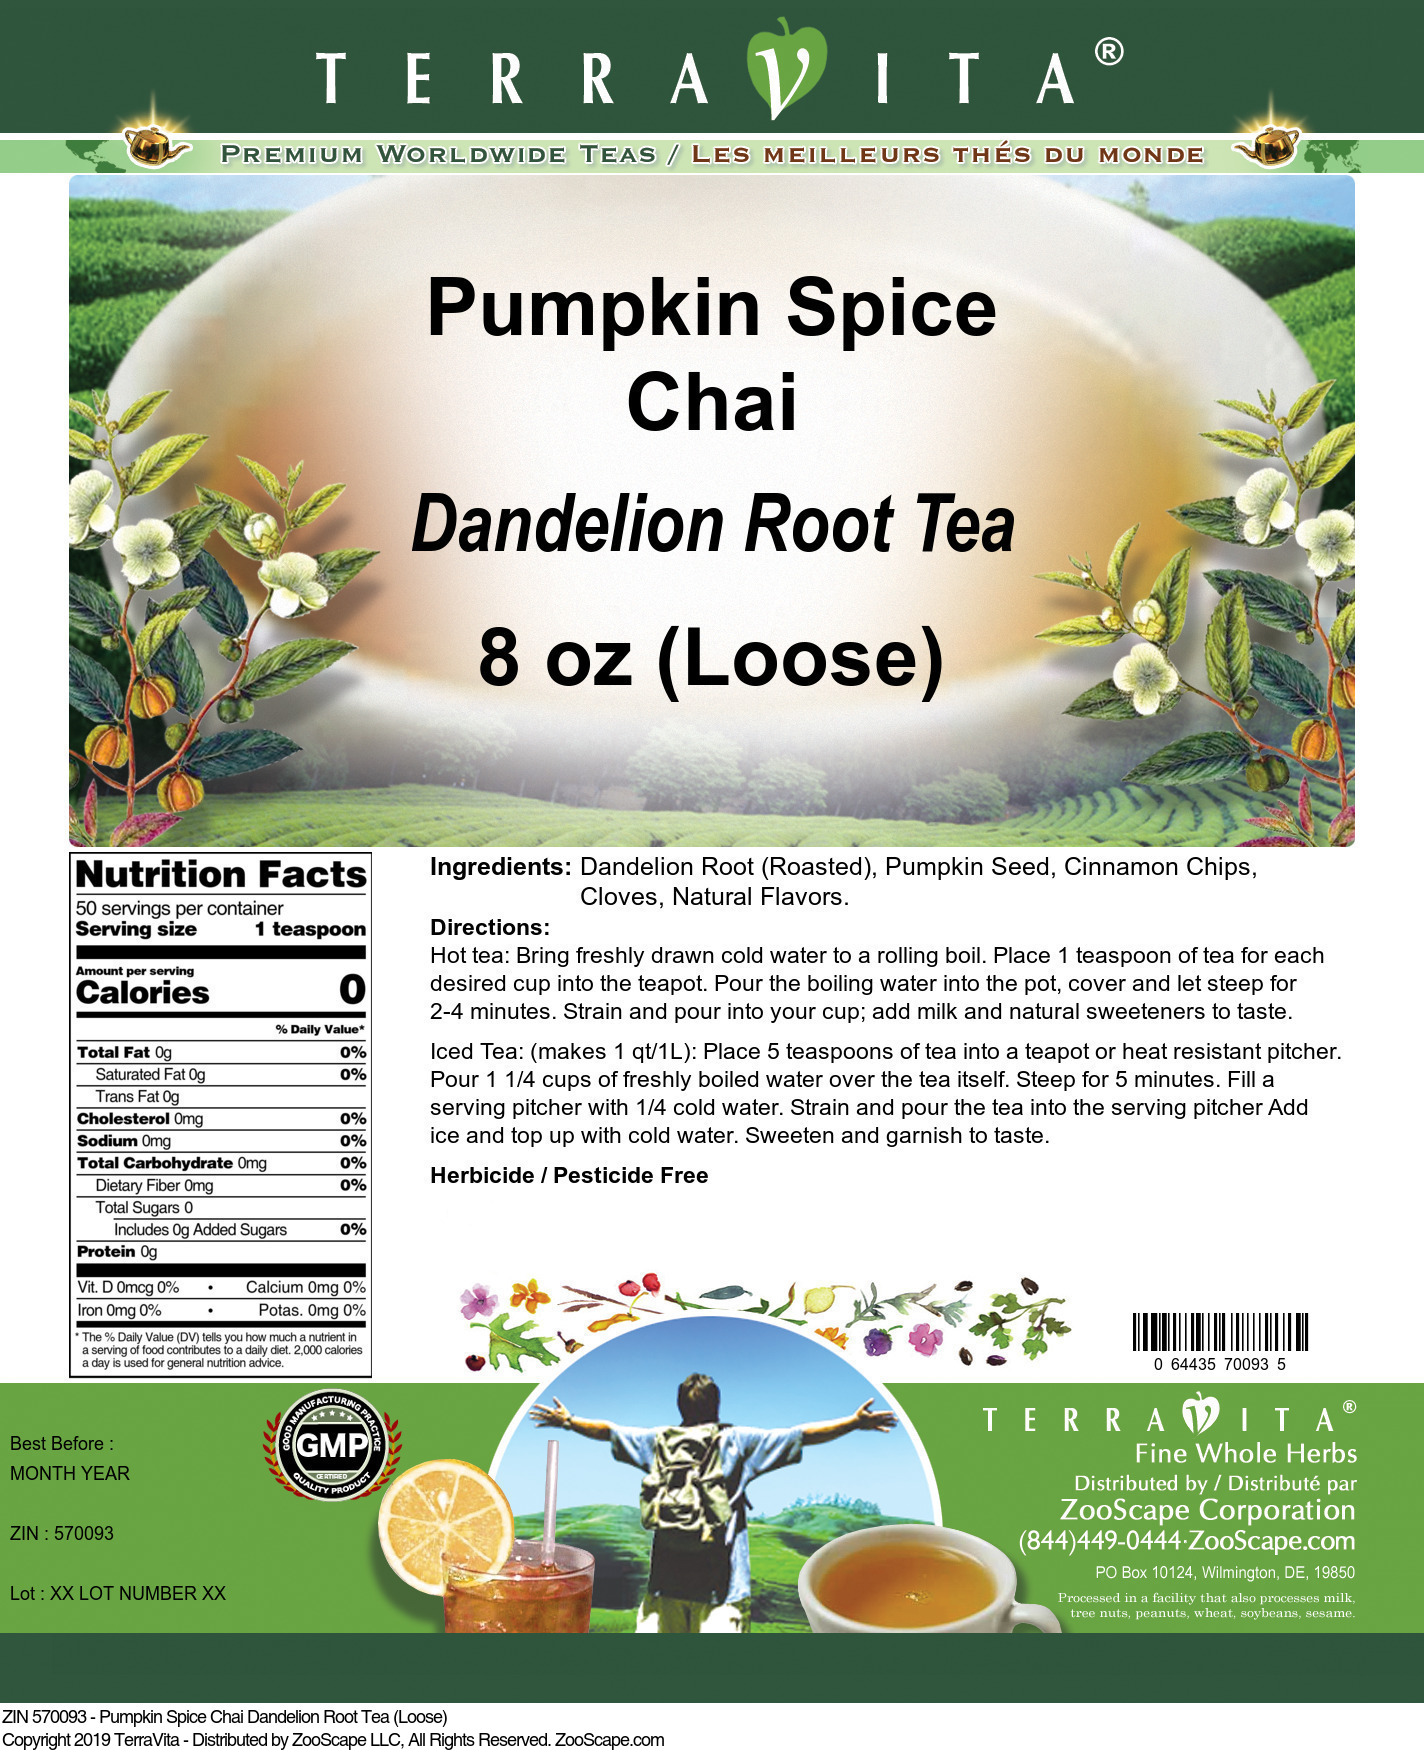 Pumpkin Spice Chai Dandelion Root Tea (Loose) - Label